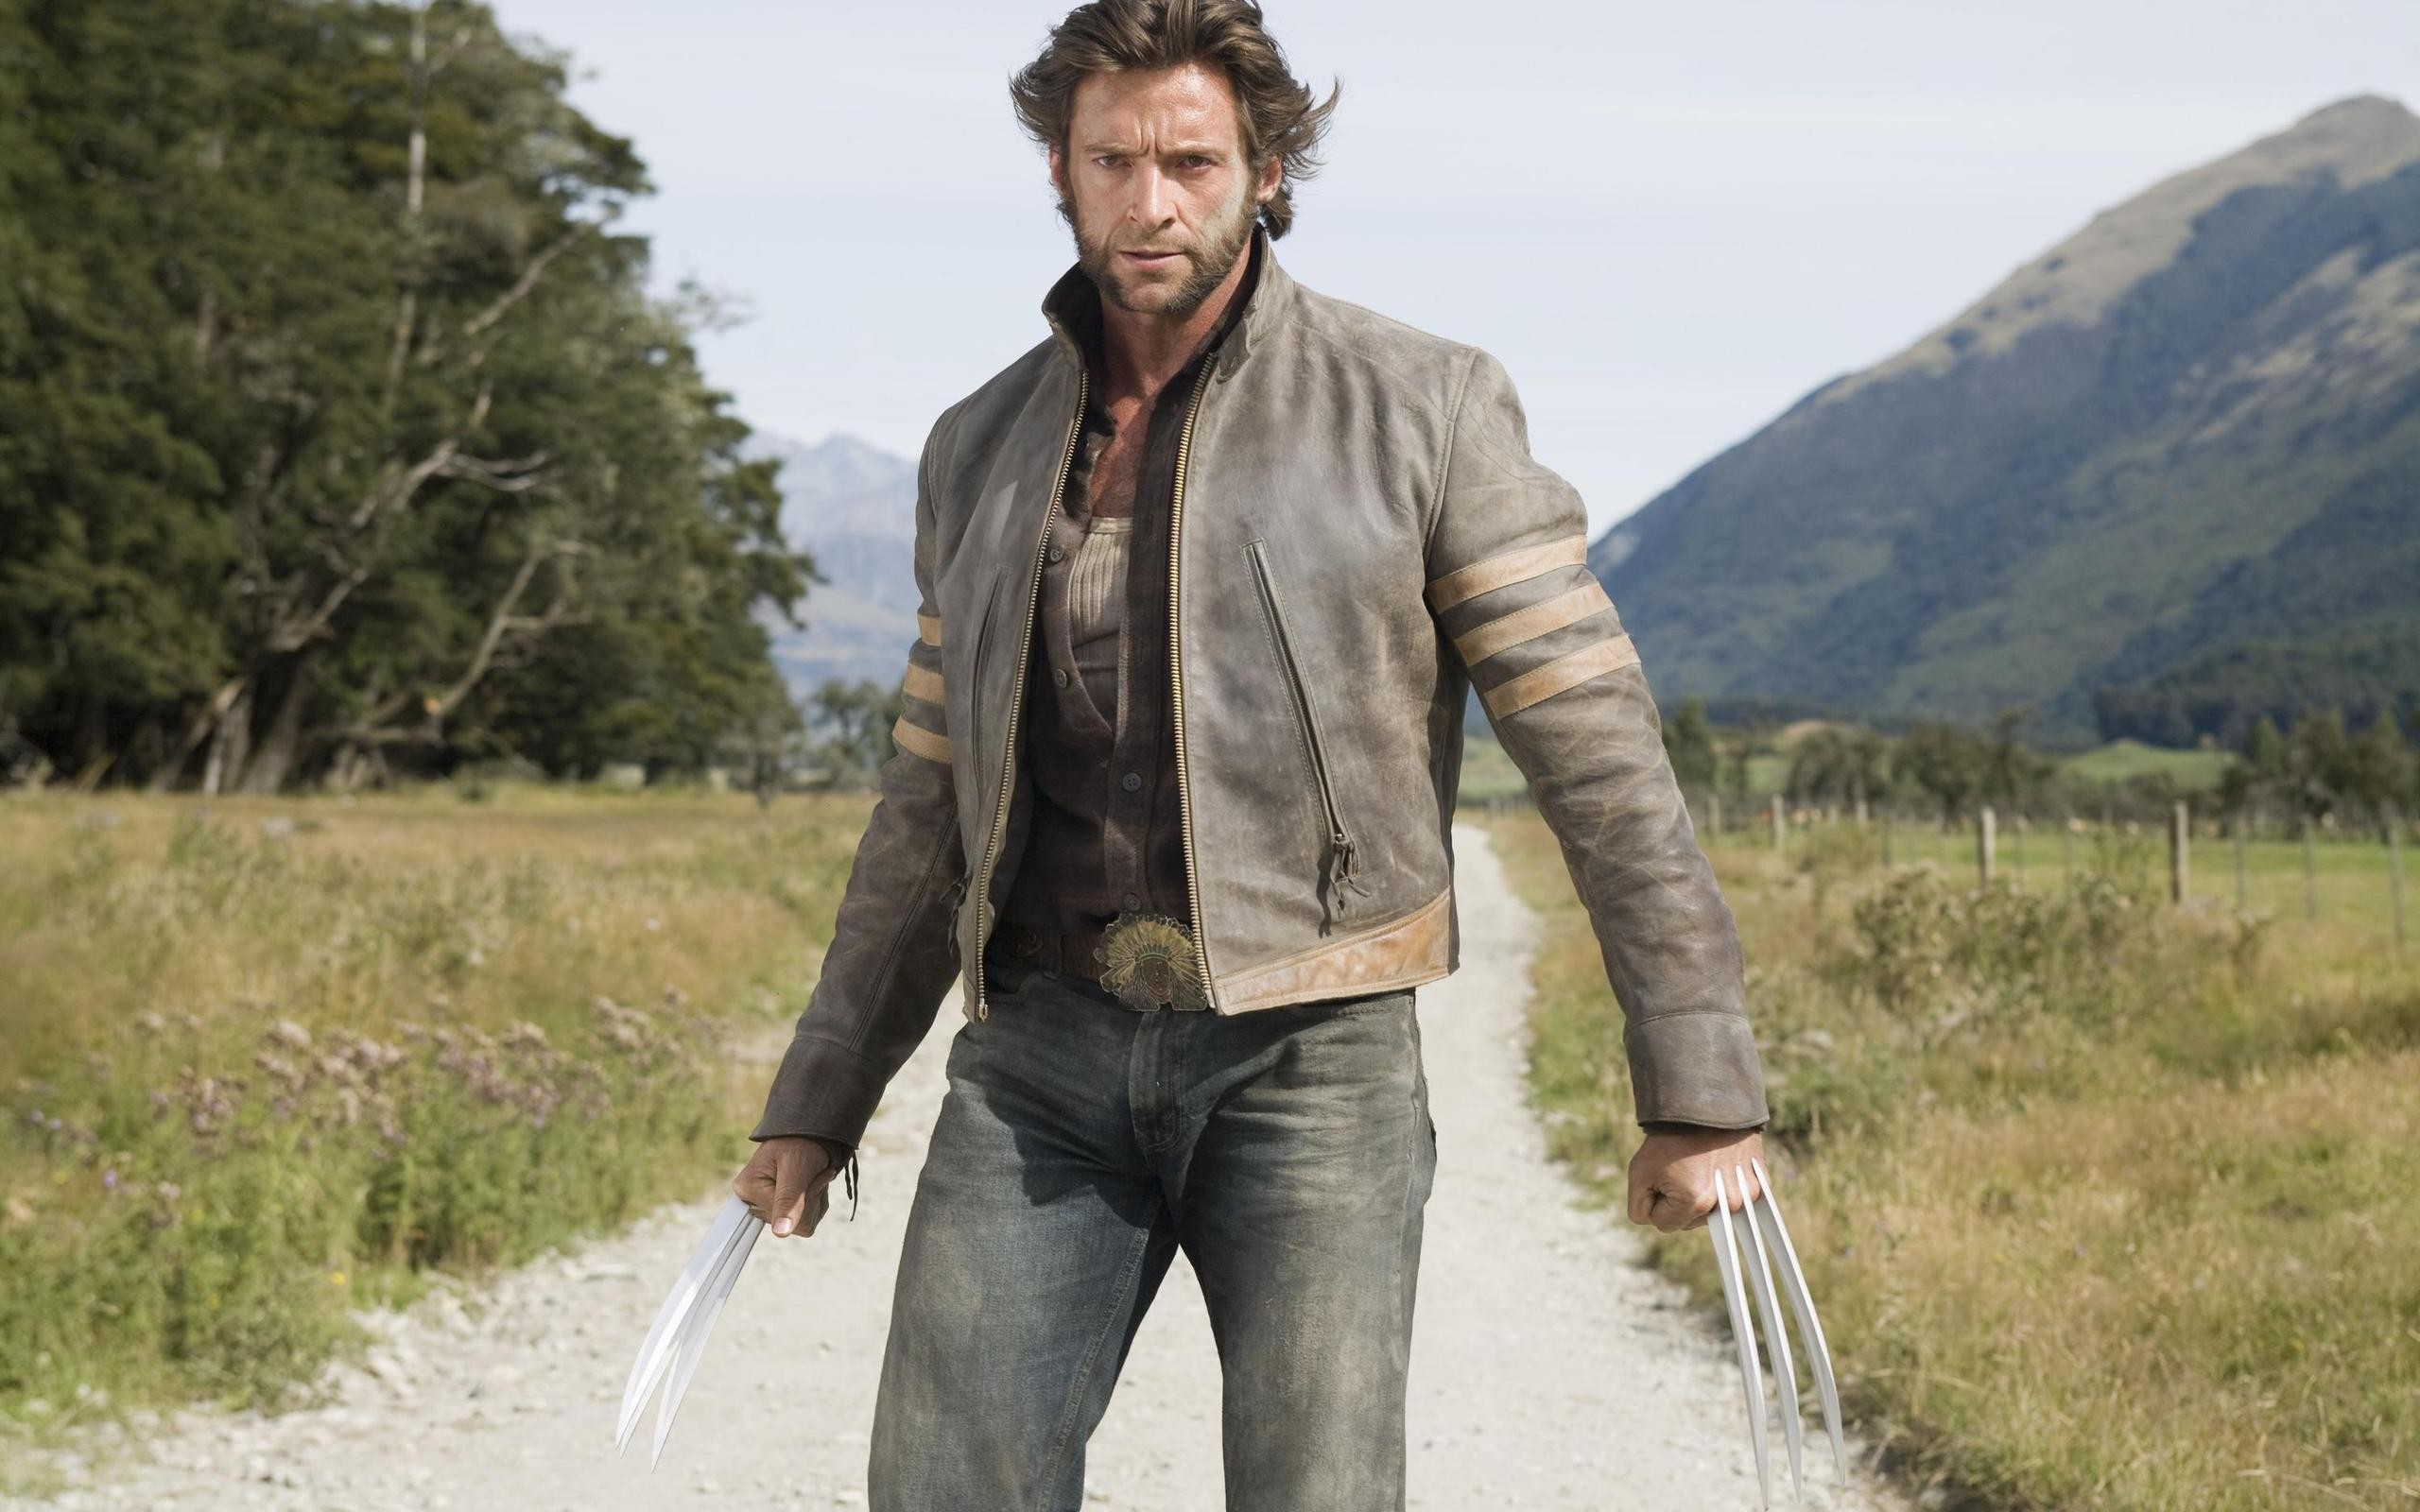 2560x1600 Hugh Jackman Wallpaper, wolverine, james logan, actor, man, hero, mutant